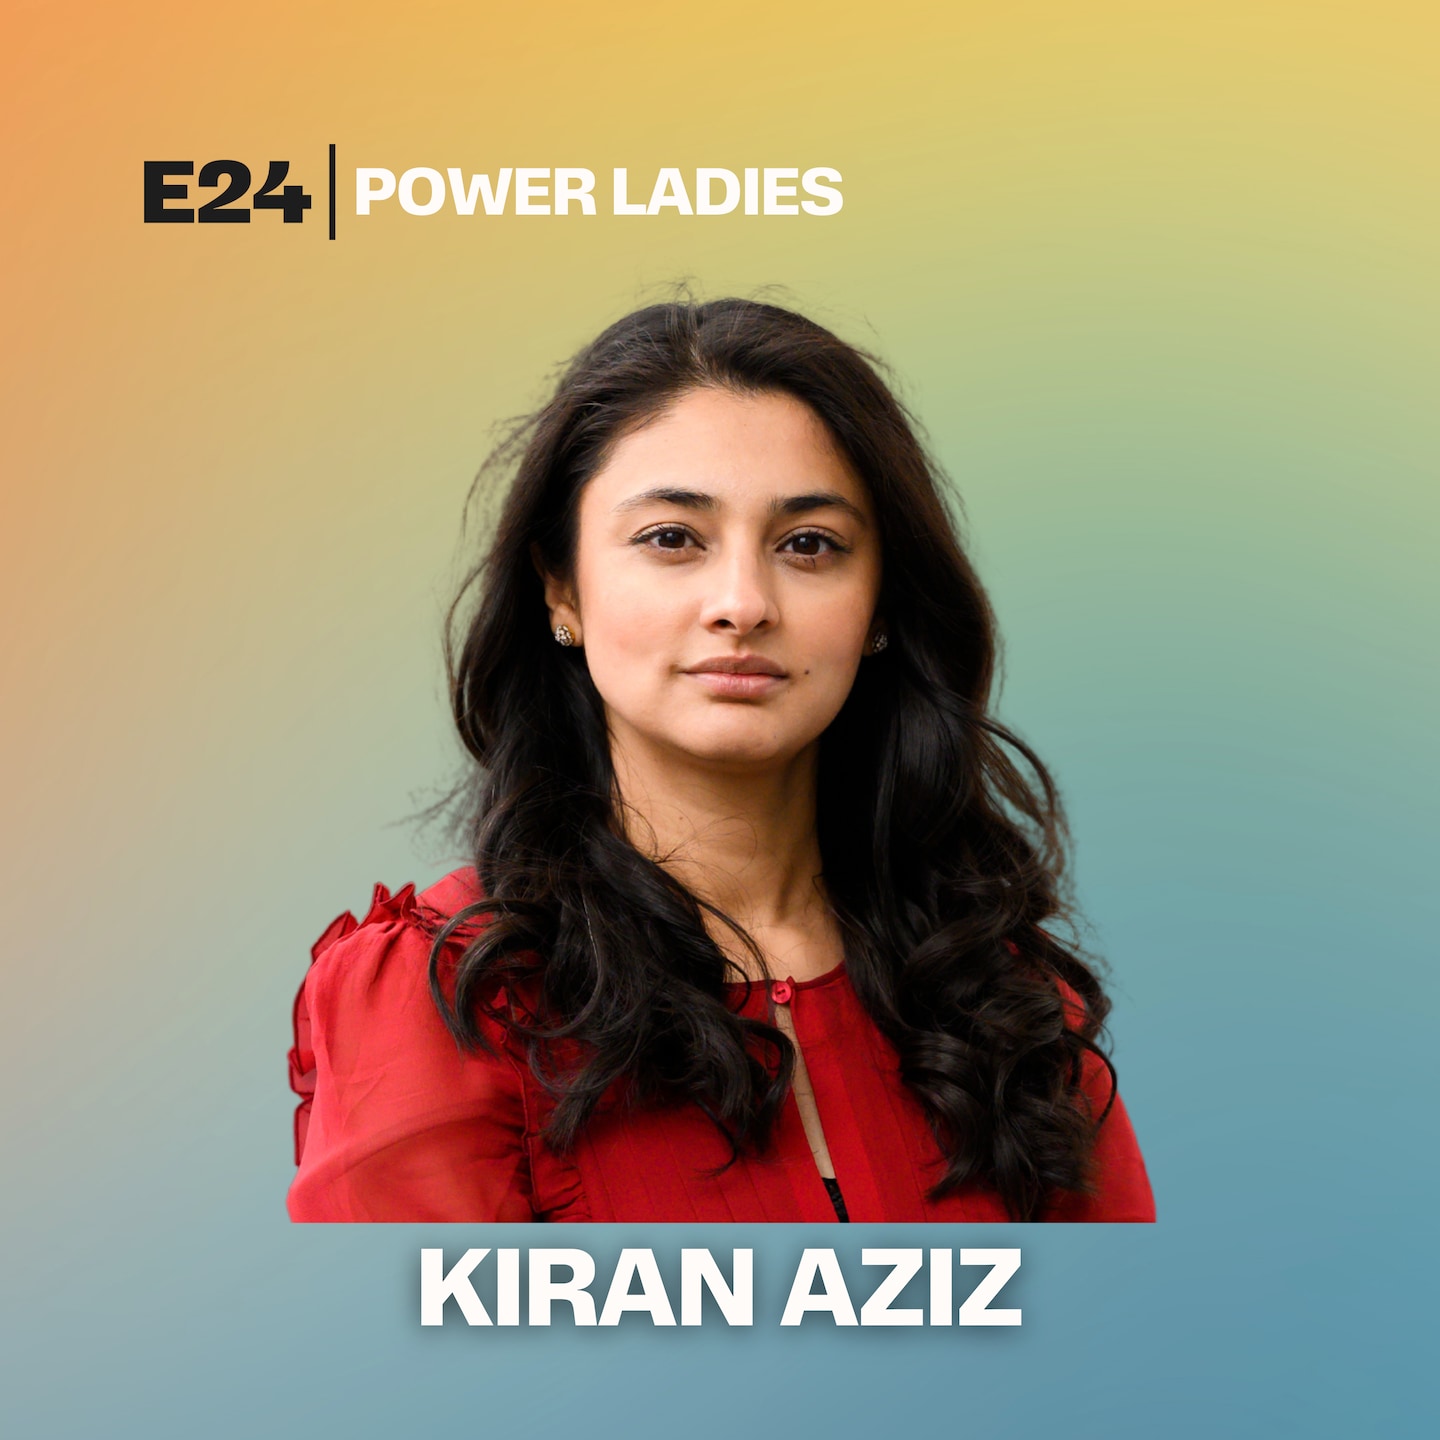 Kiran Aziz: - Kunnskap gjør meg ydmyk